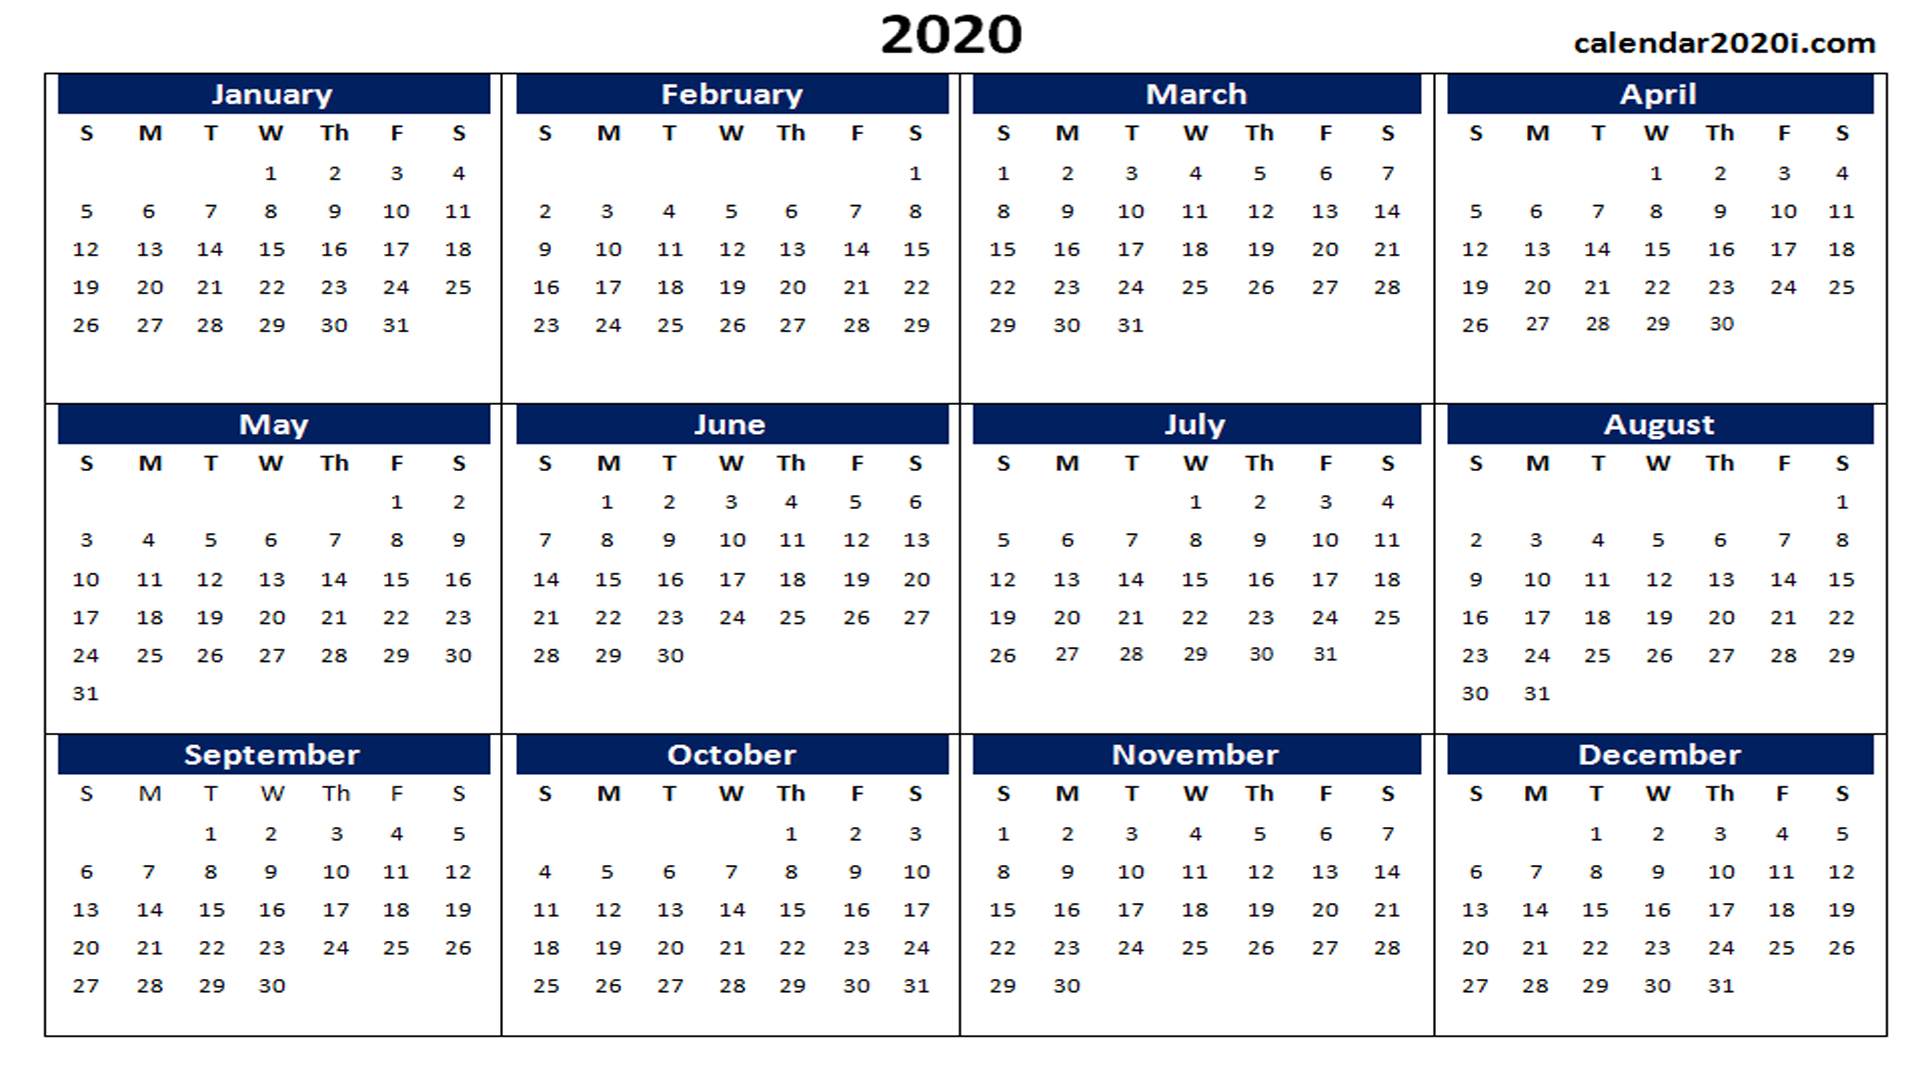 Blank 2020 Calendar Printable Templates | Calendar 2020 intended for 2020 Calendar Printable